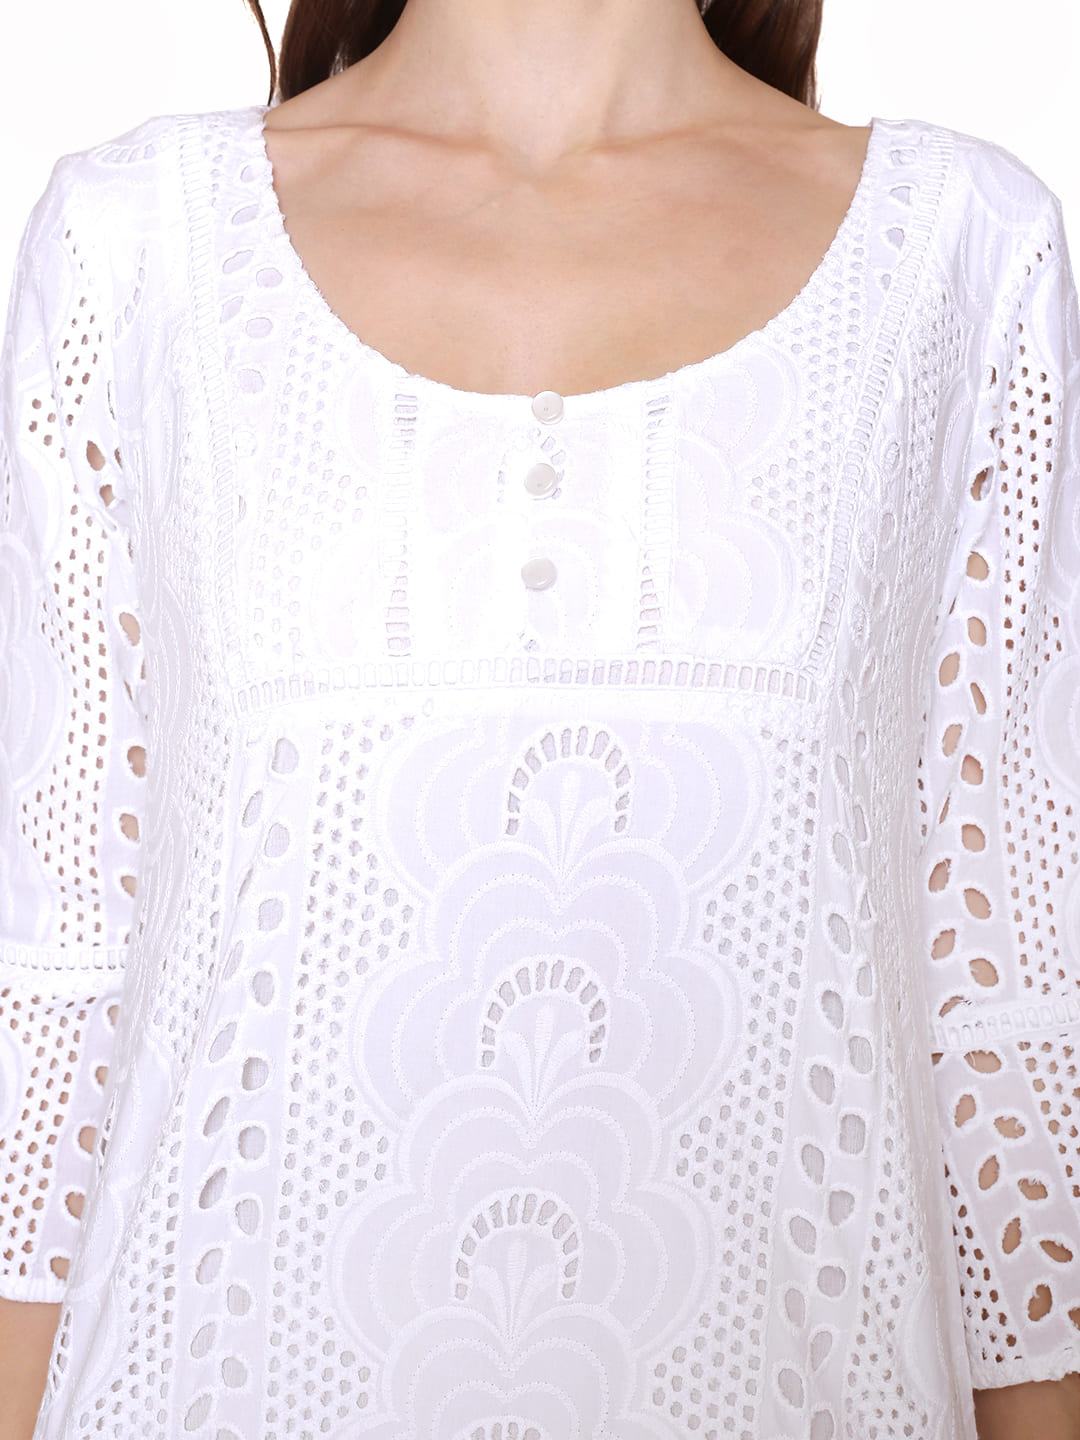 Self Designed Schiffli White Dress